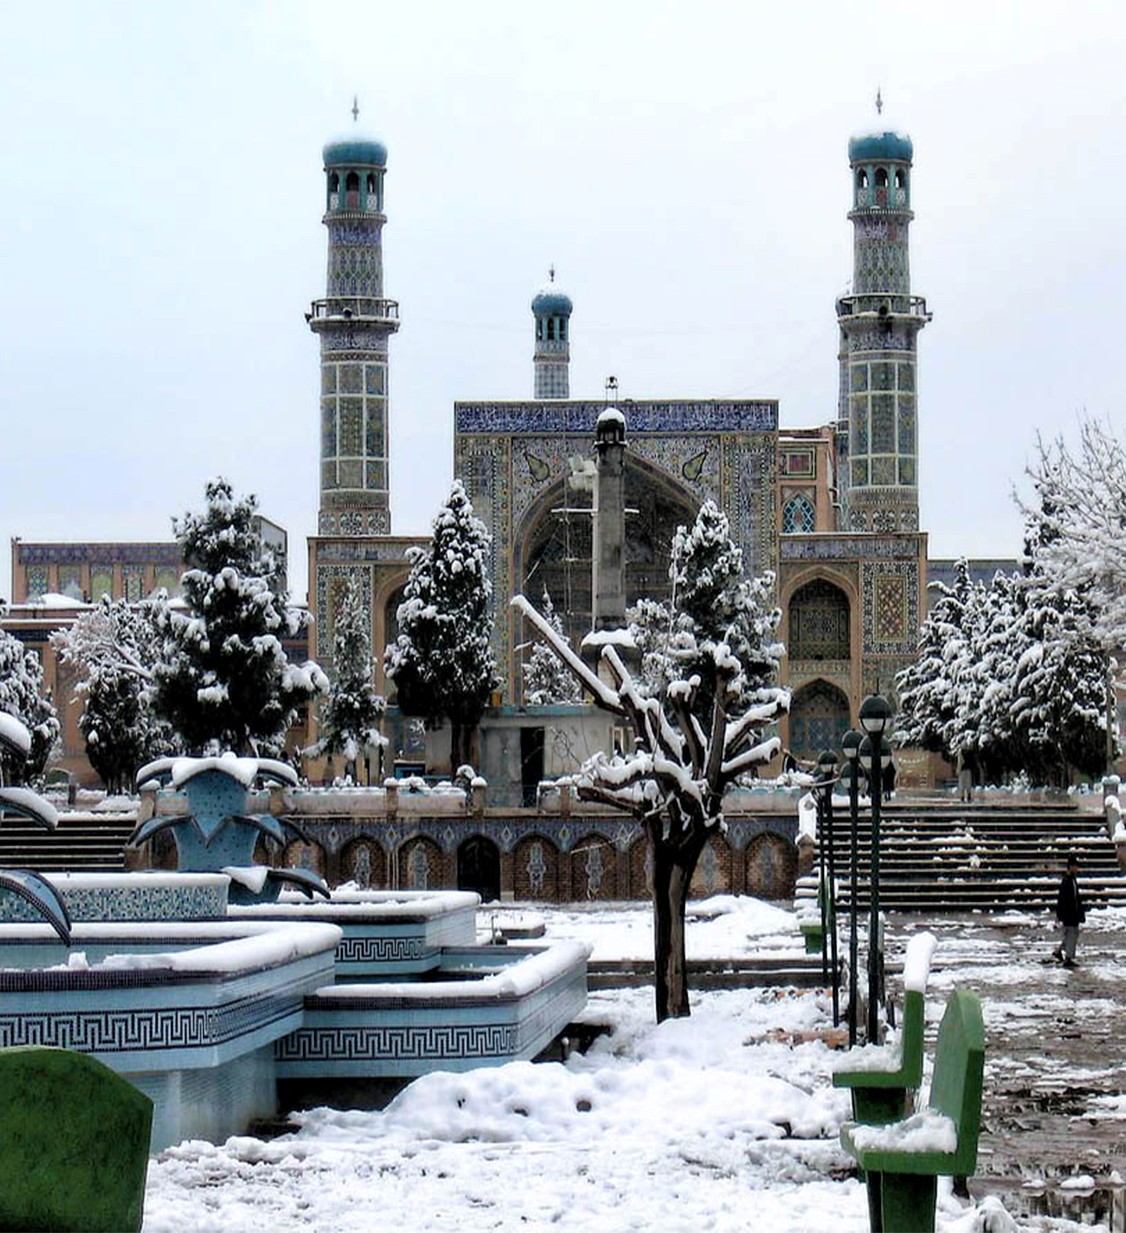 The Great Mosque in Herat, Afgahnistan